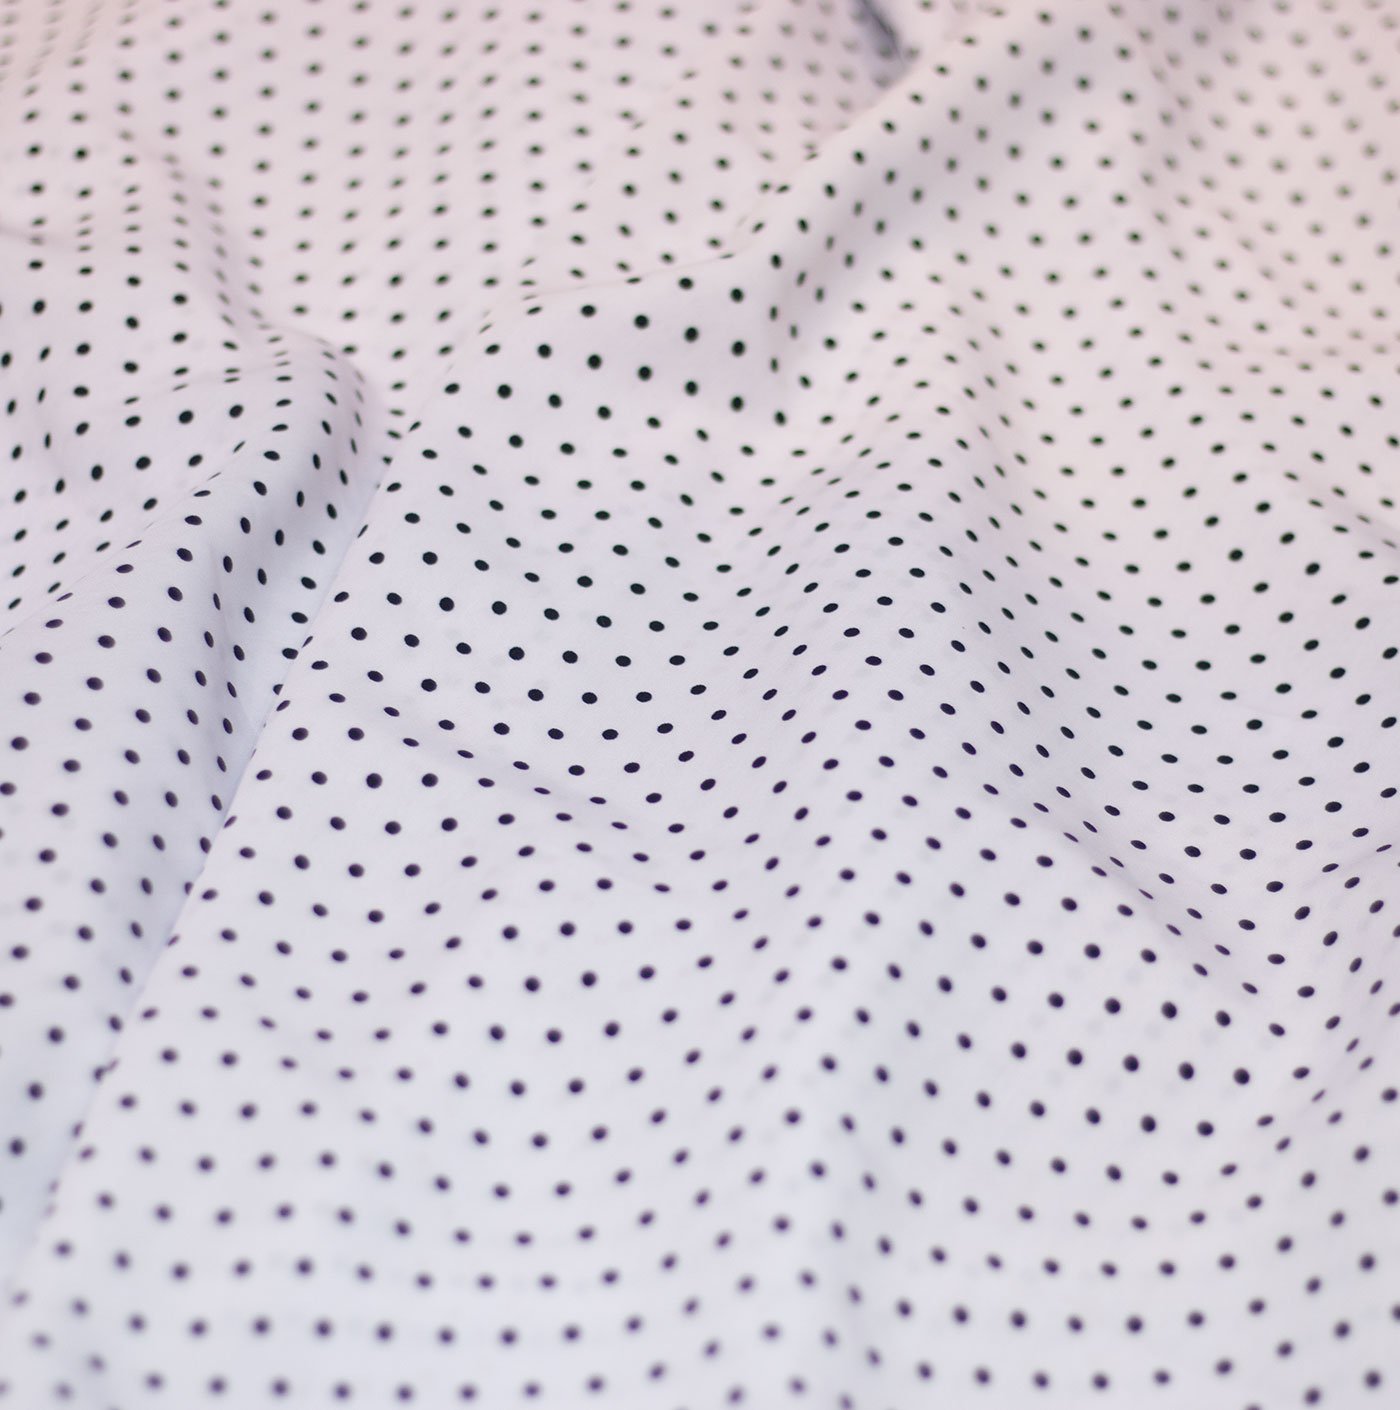 Black Polka Dots White Lorenzo Printed Cotton Fabric